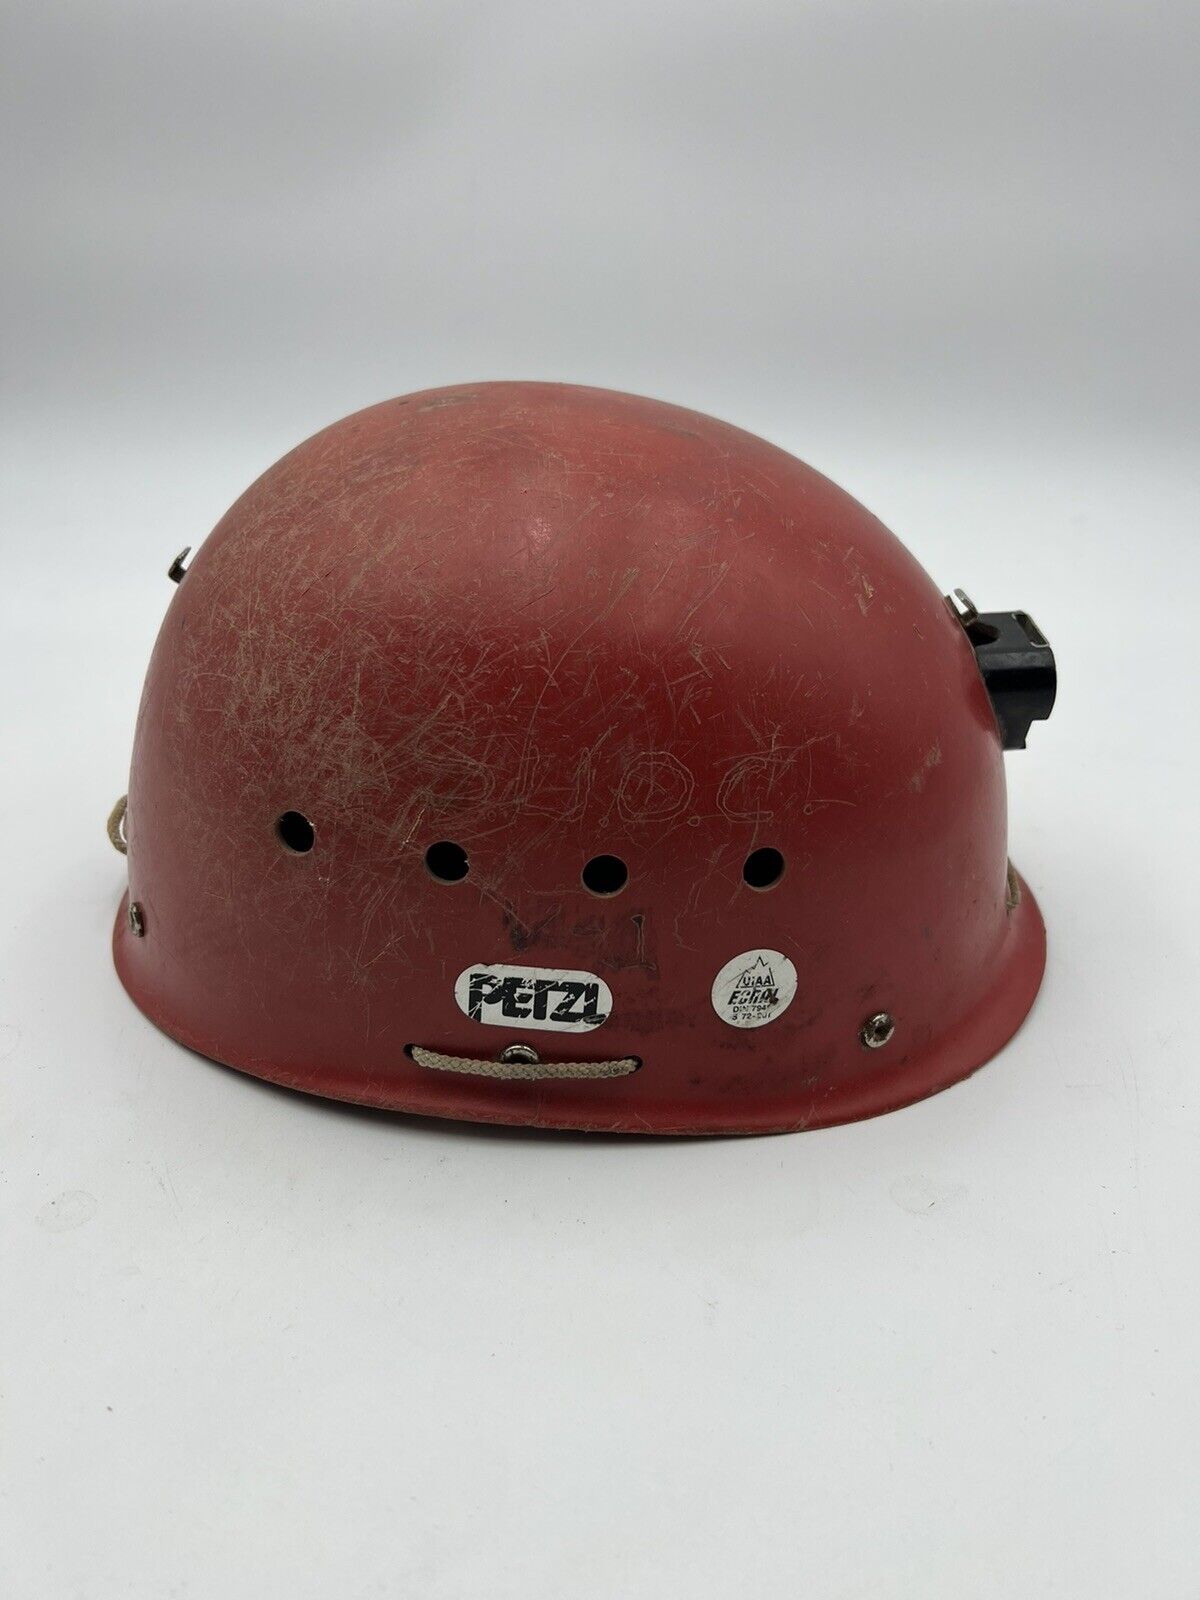 Vintage Petzl Caving Climbing Adventure Helmet, Ecrin, Size M 50-56 Cm - Red